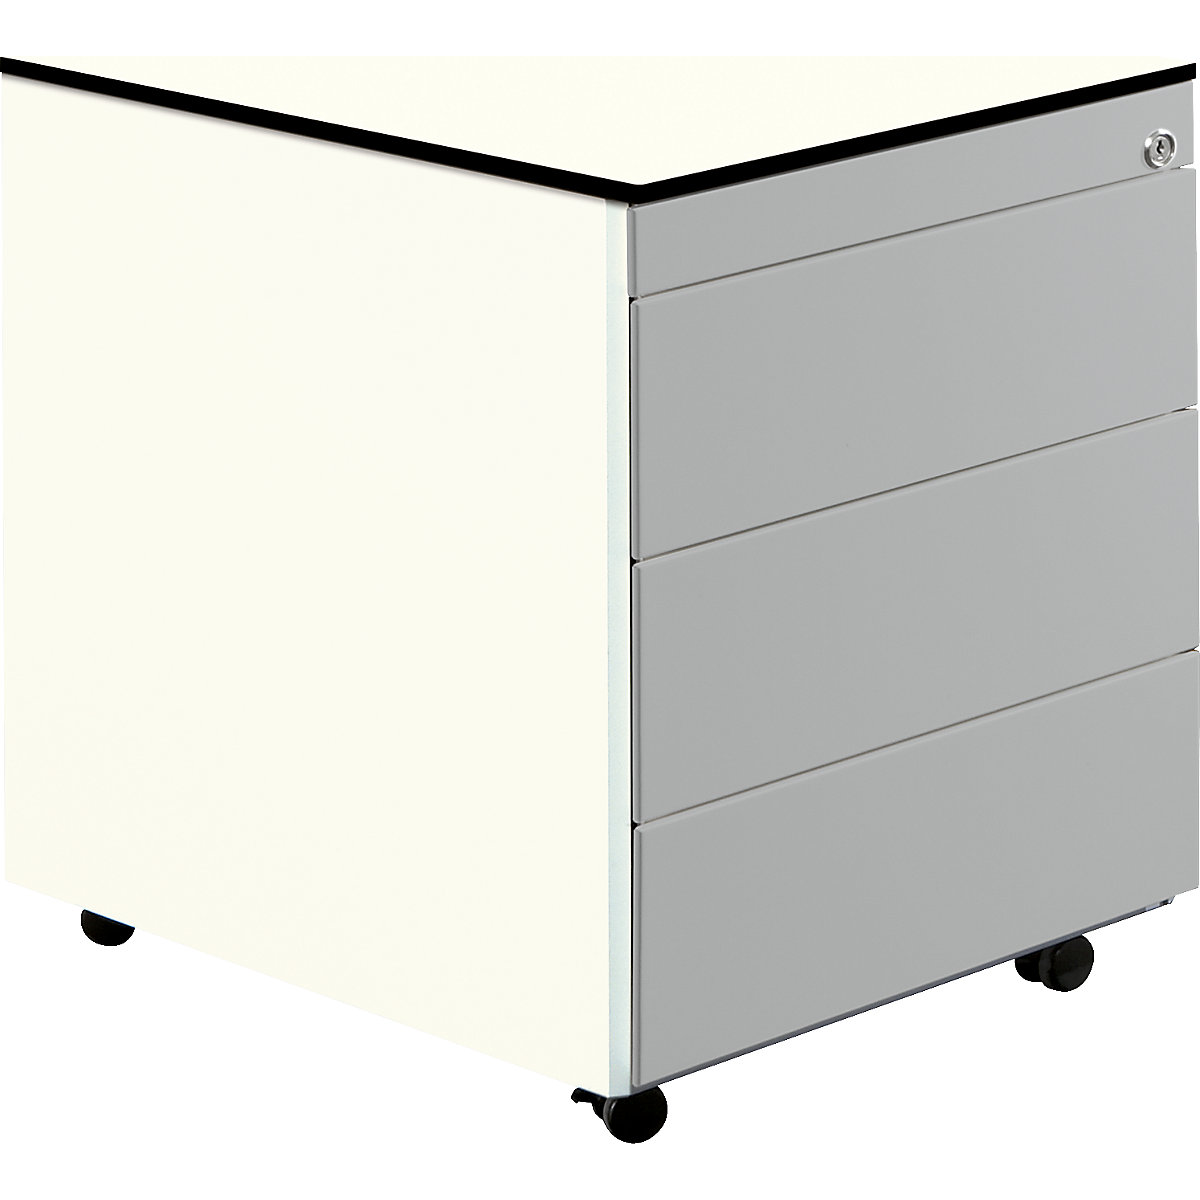 Casetieră cu sertare cu role – mauser, î. x ad. 573 x 600 mm, blat HPL cu nucleu plin, 3 sertare, alb pur / alb aluminiu / alb